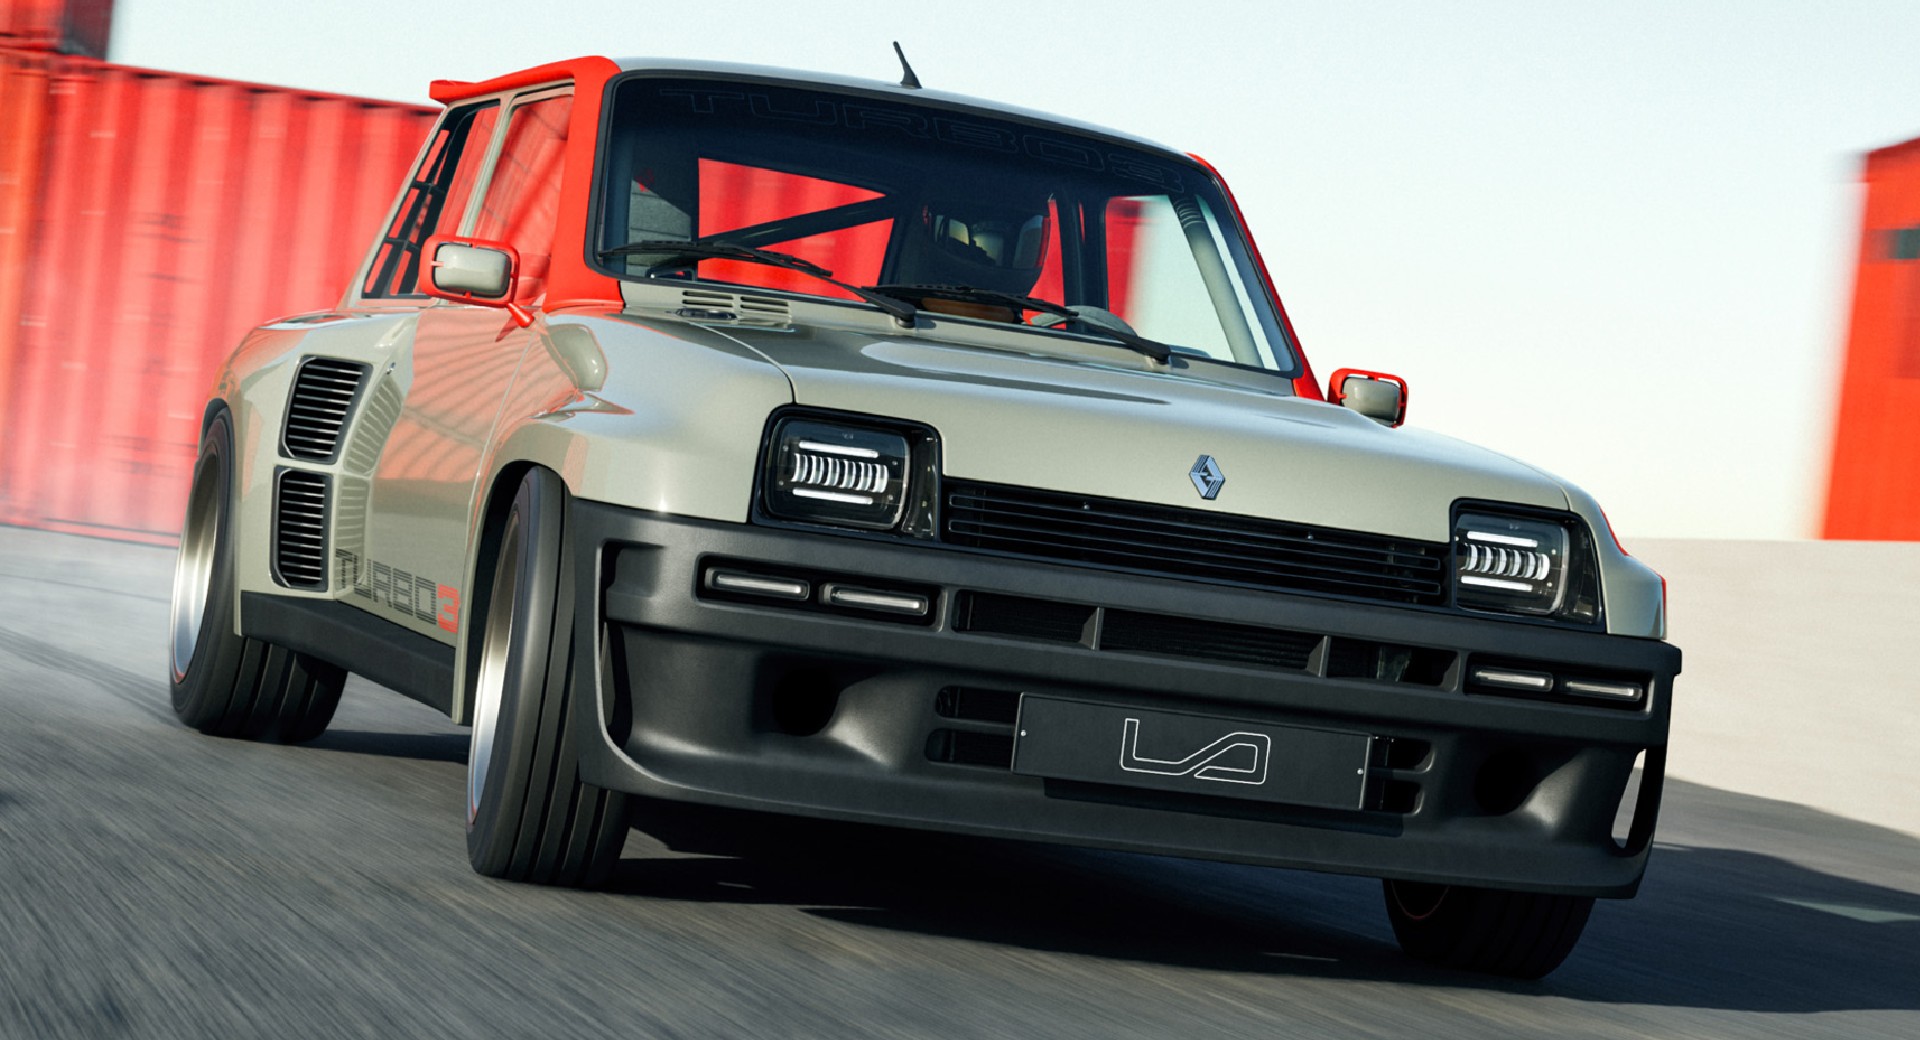 Homologation Specials: 1980 Renault 5 Turbo 